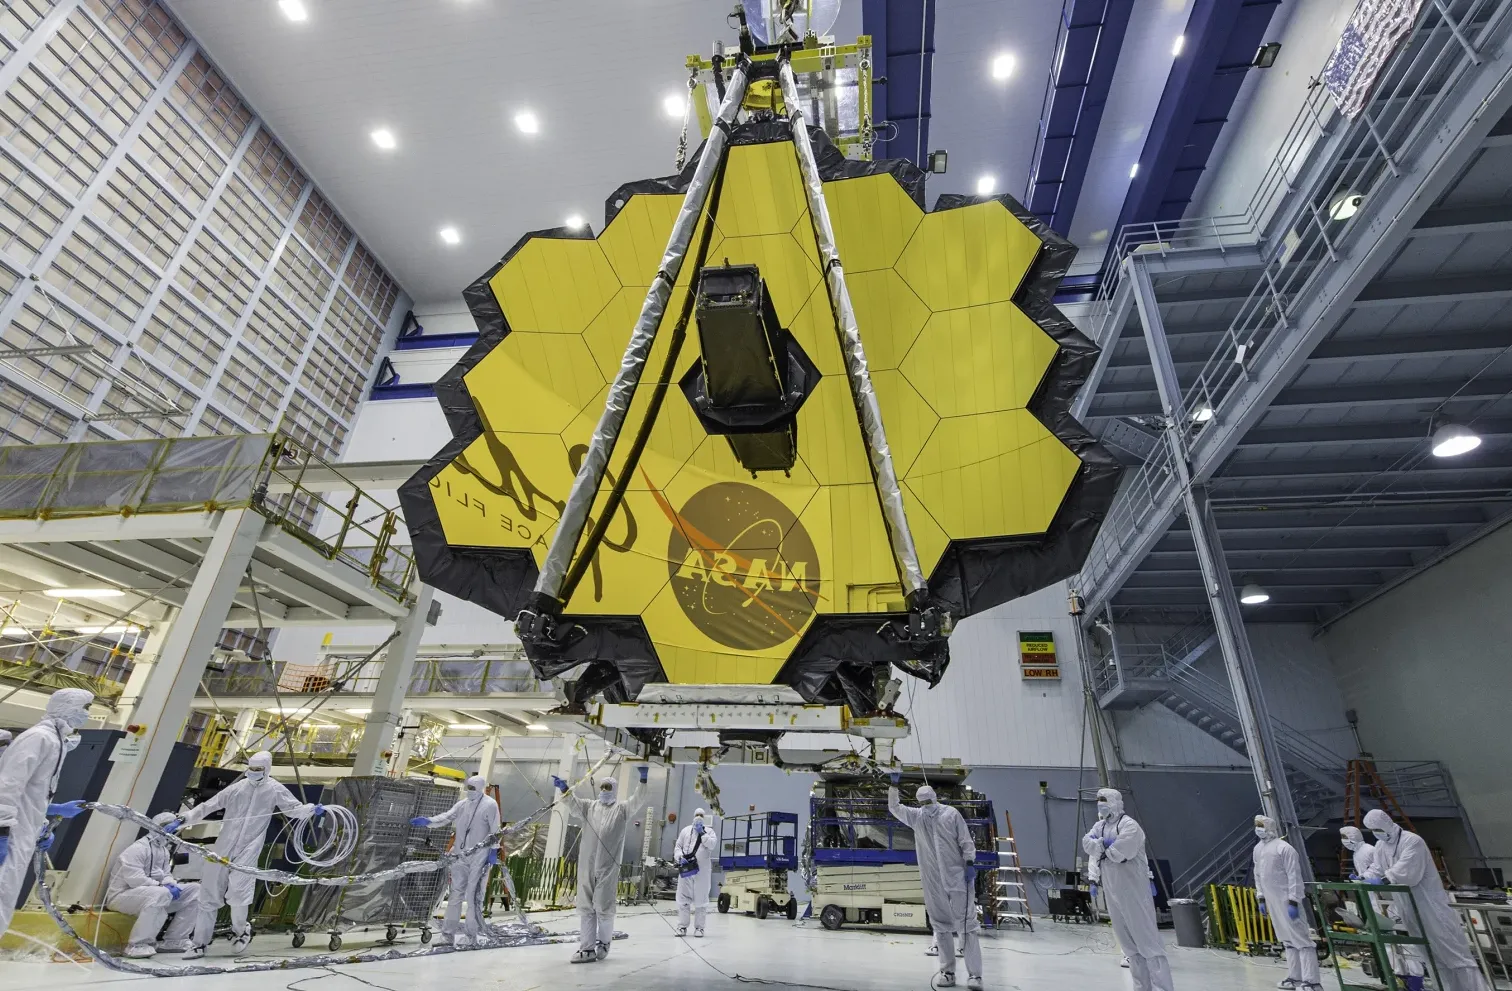 The James Webb Space Telescope (Image credit: ASSOCIATED PRESS)